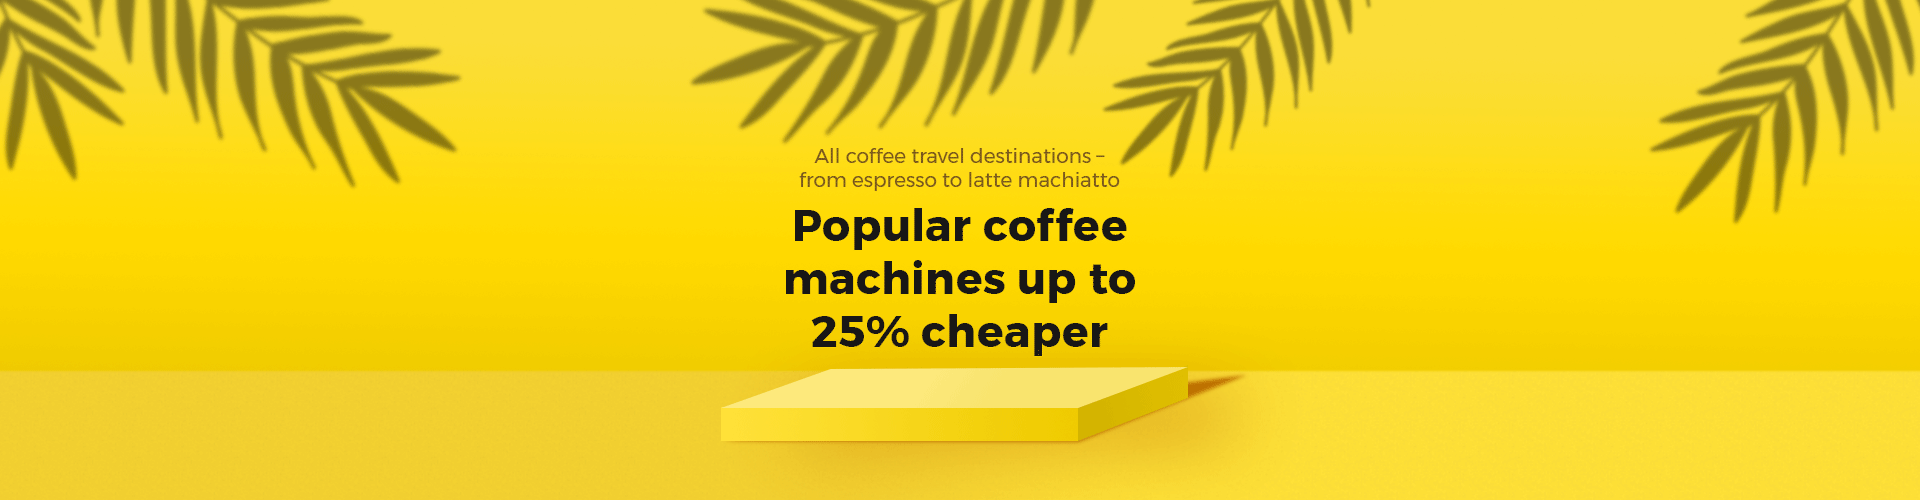 popular coffee machines discount